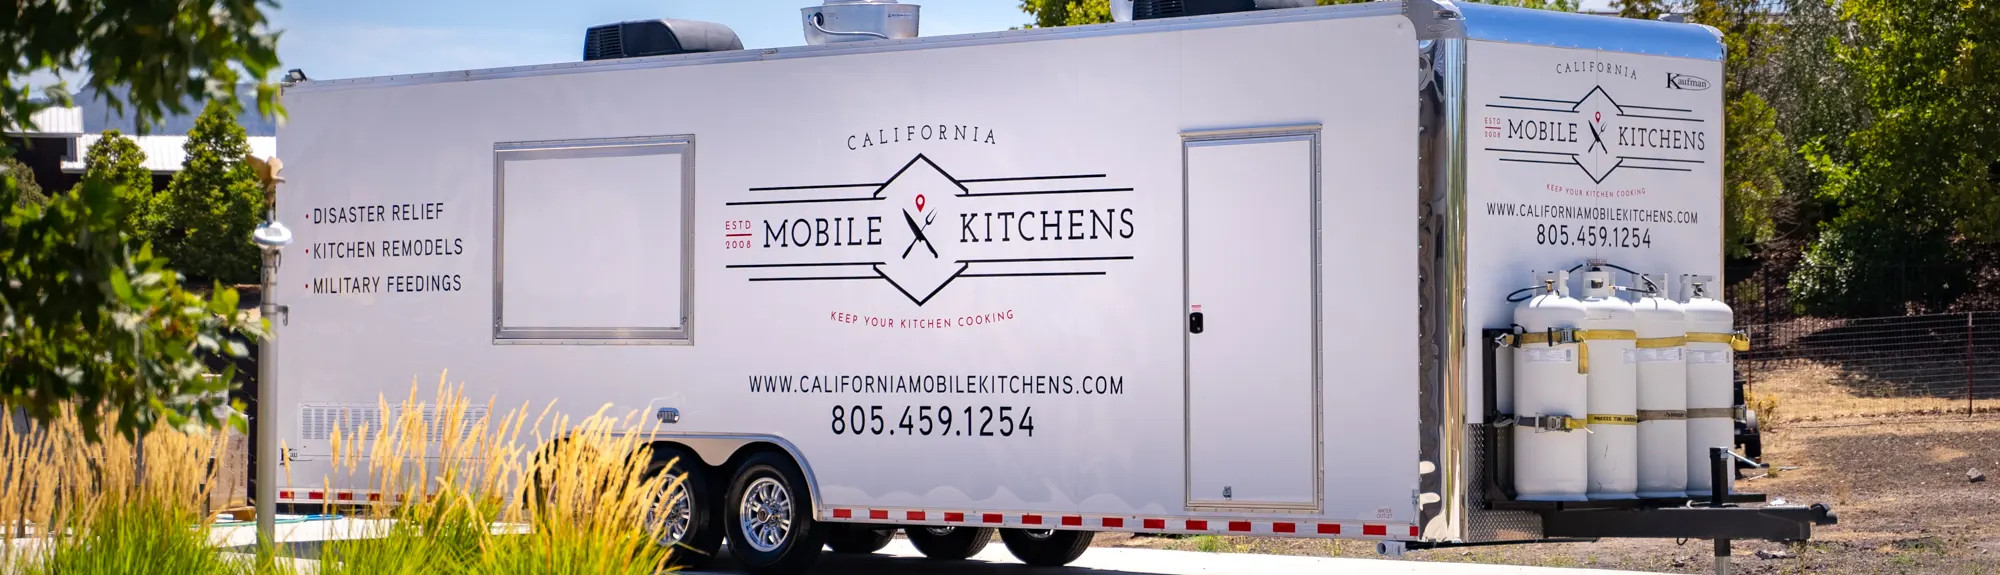 32 Foot Mobile Kitchen Trailer